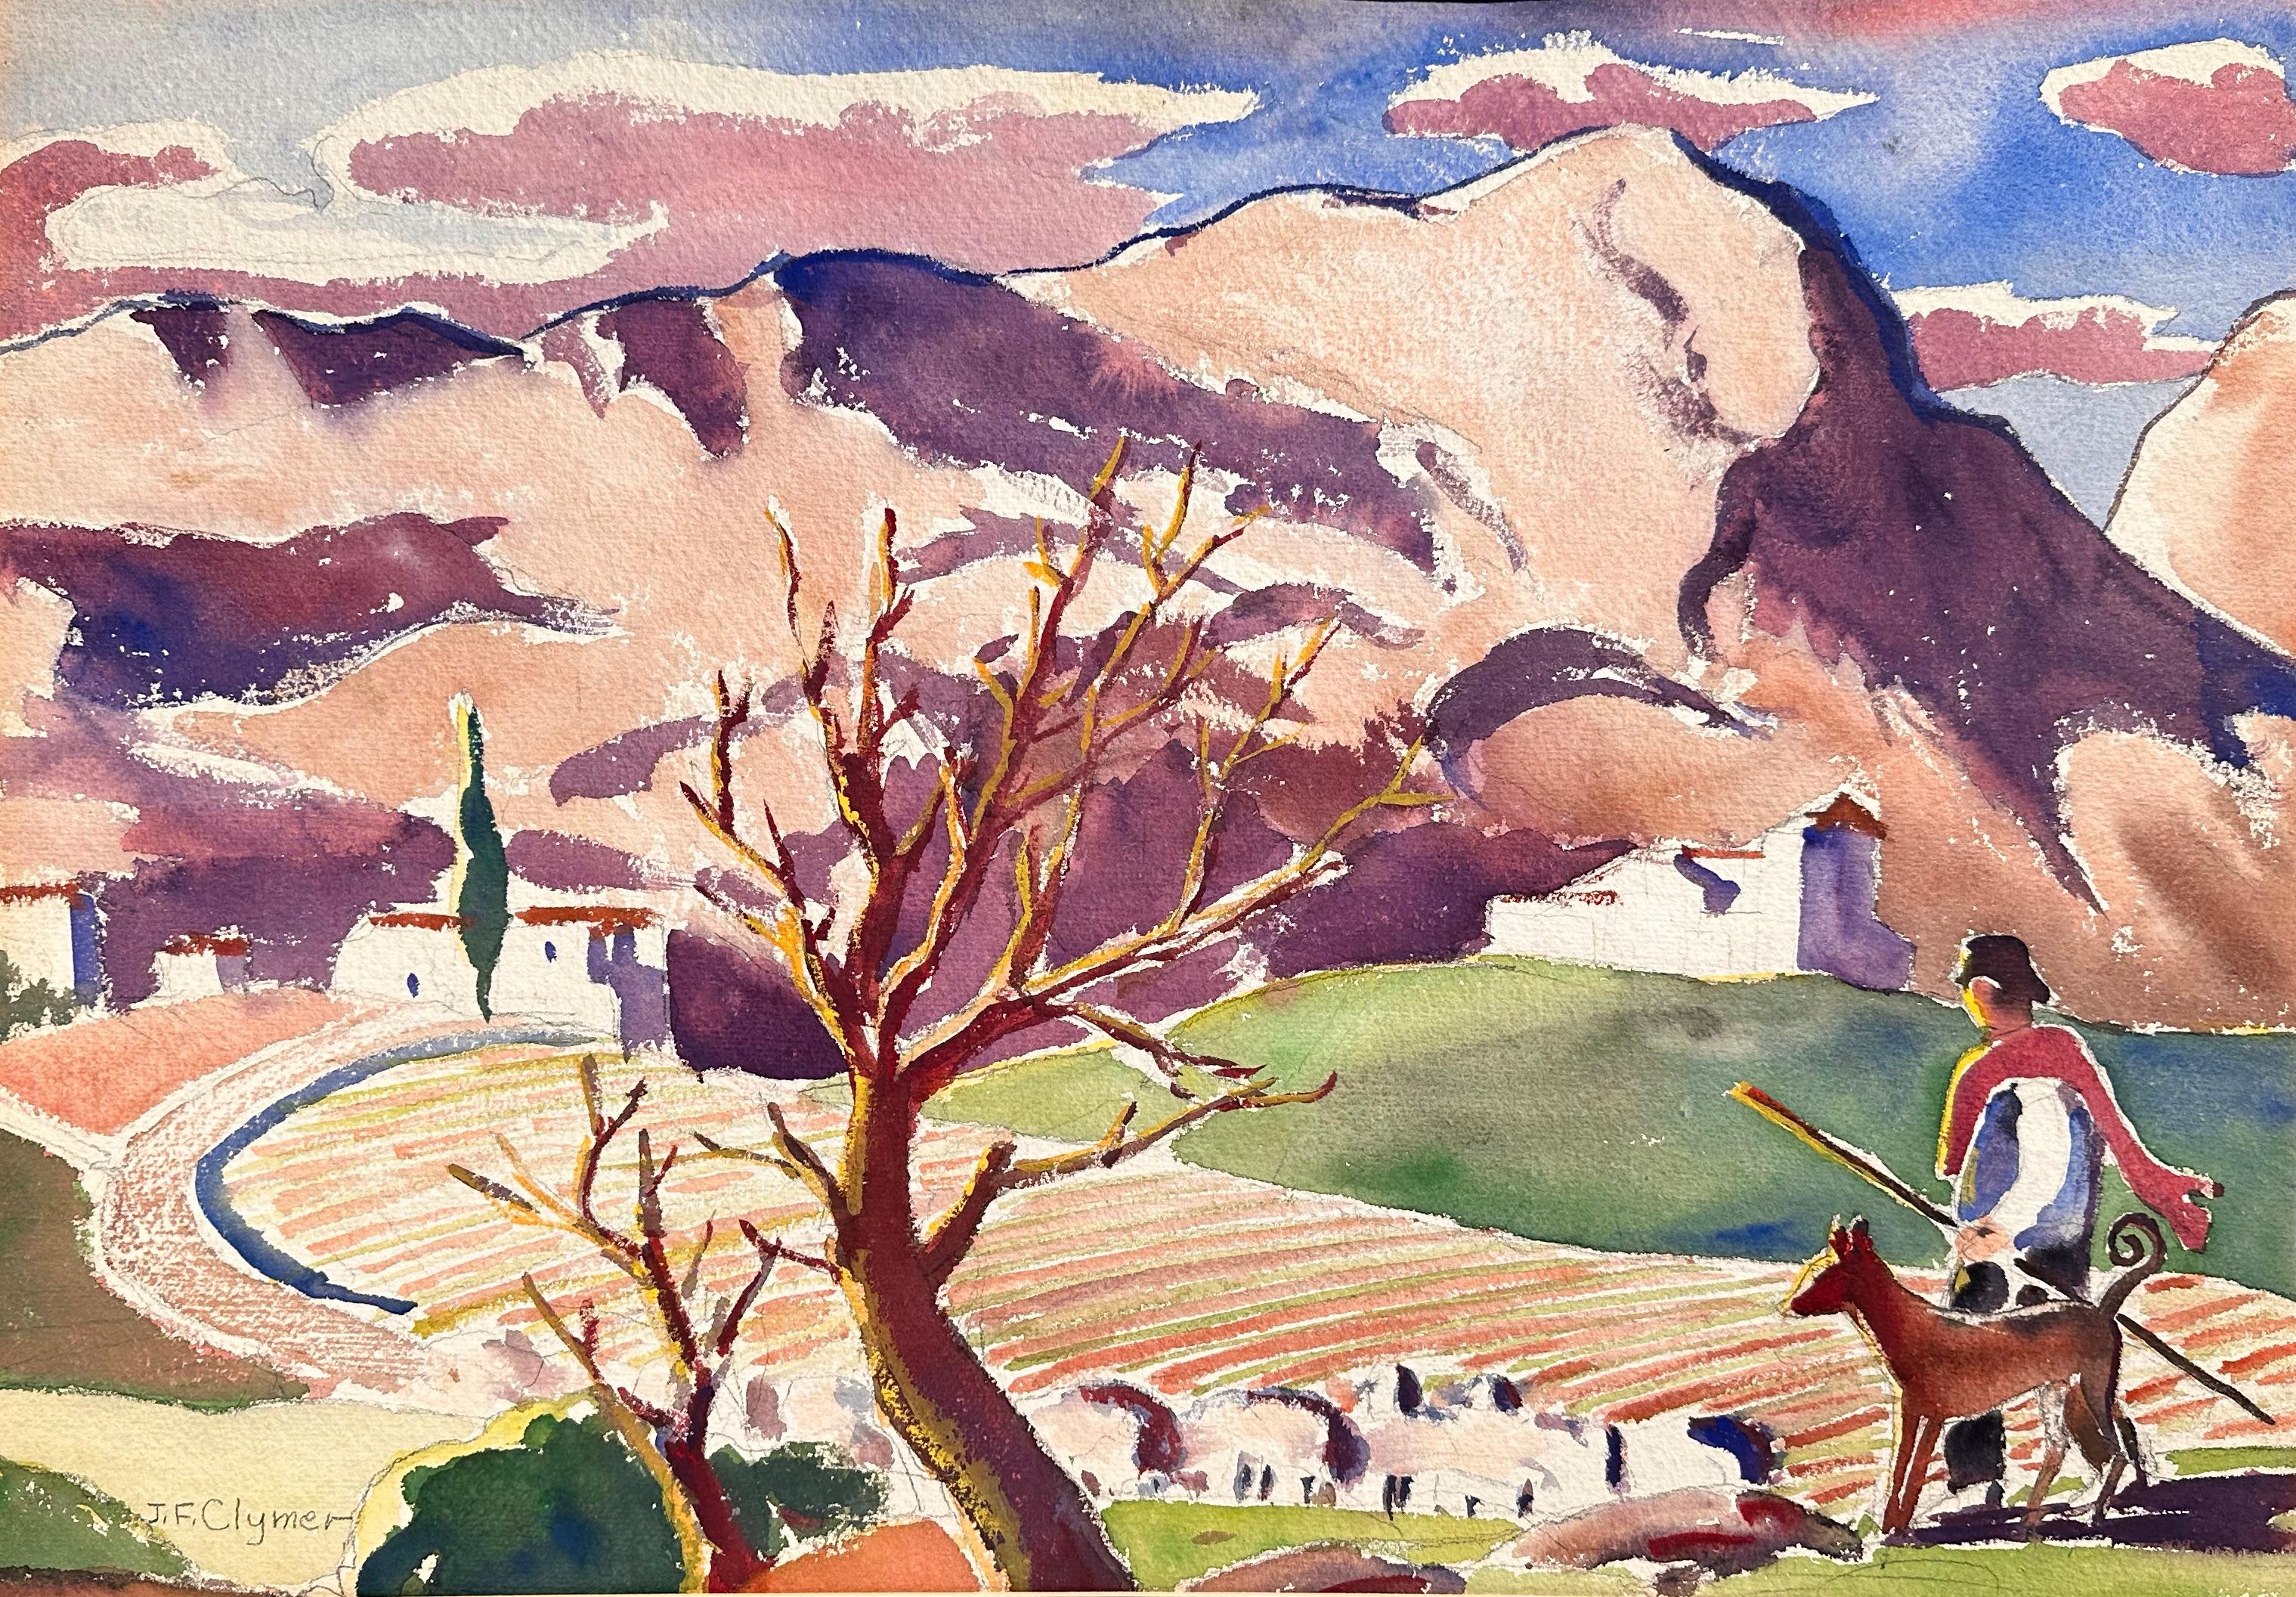 James Floyd Clymer Landscape Painting - Mallorca Spain (Spanish Mediterranean landscape)